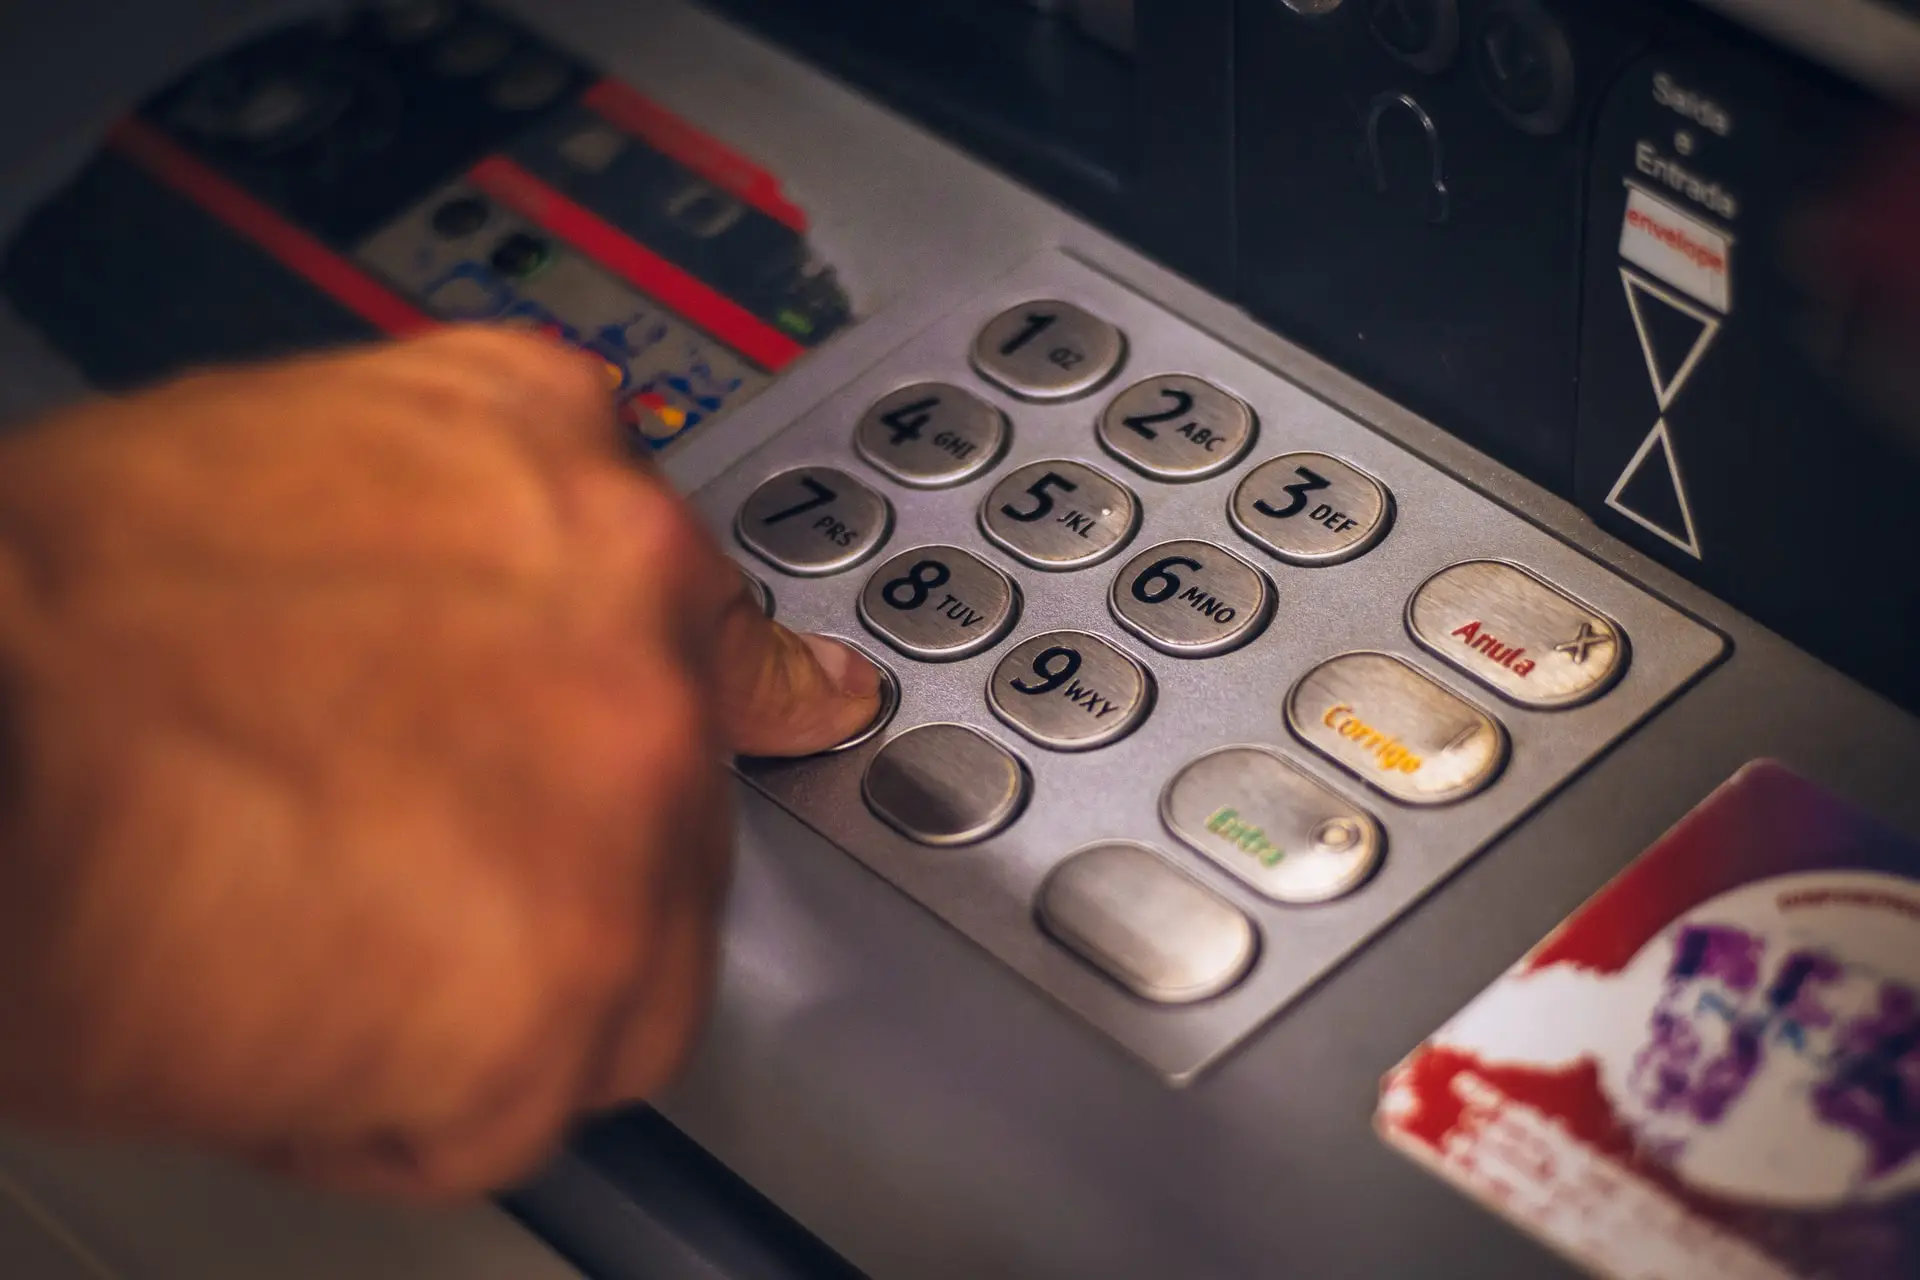 ATM pin input